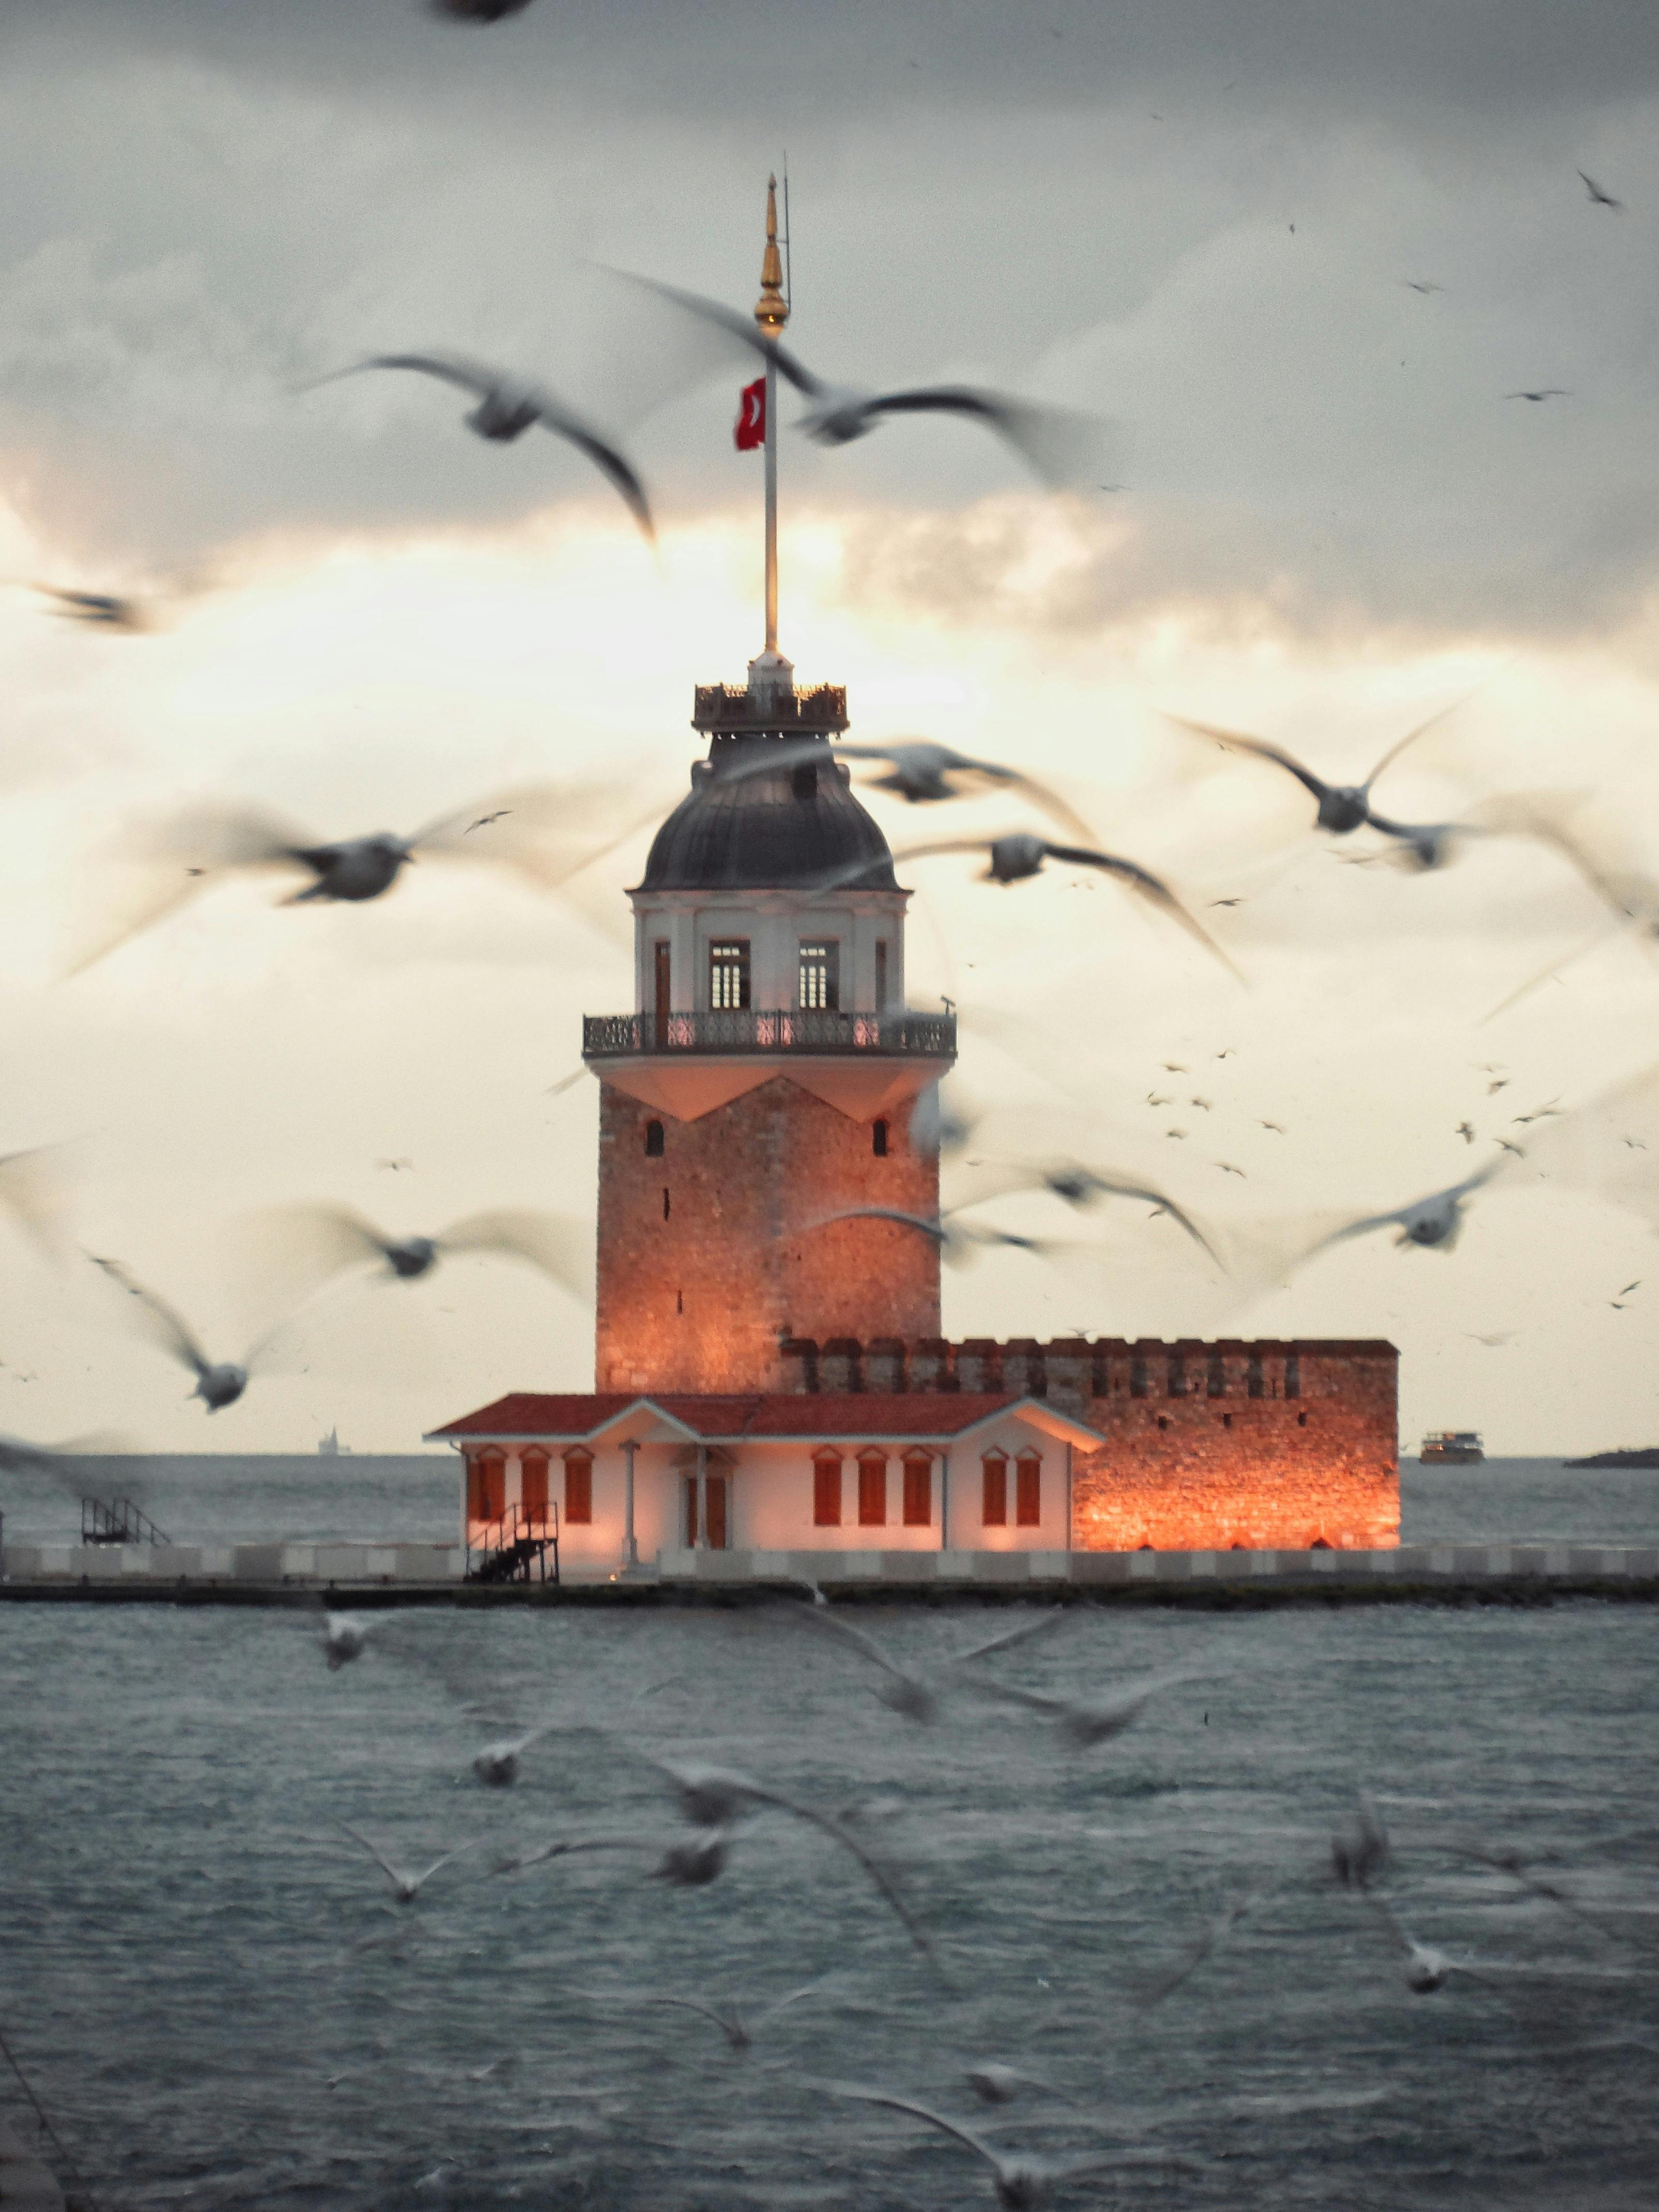 birds flying around kiz kulesi in istanbul